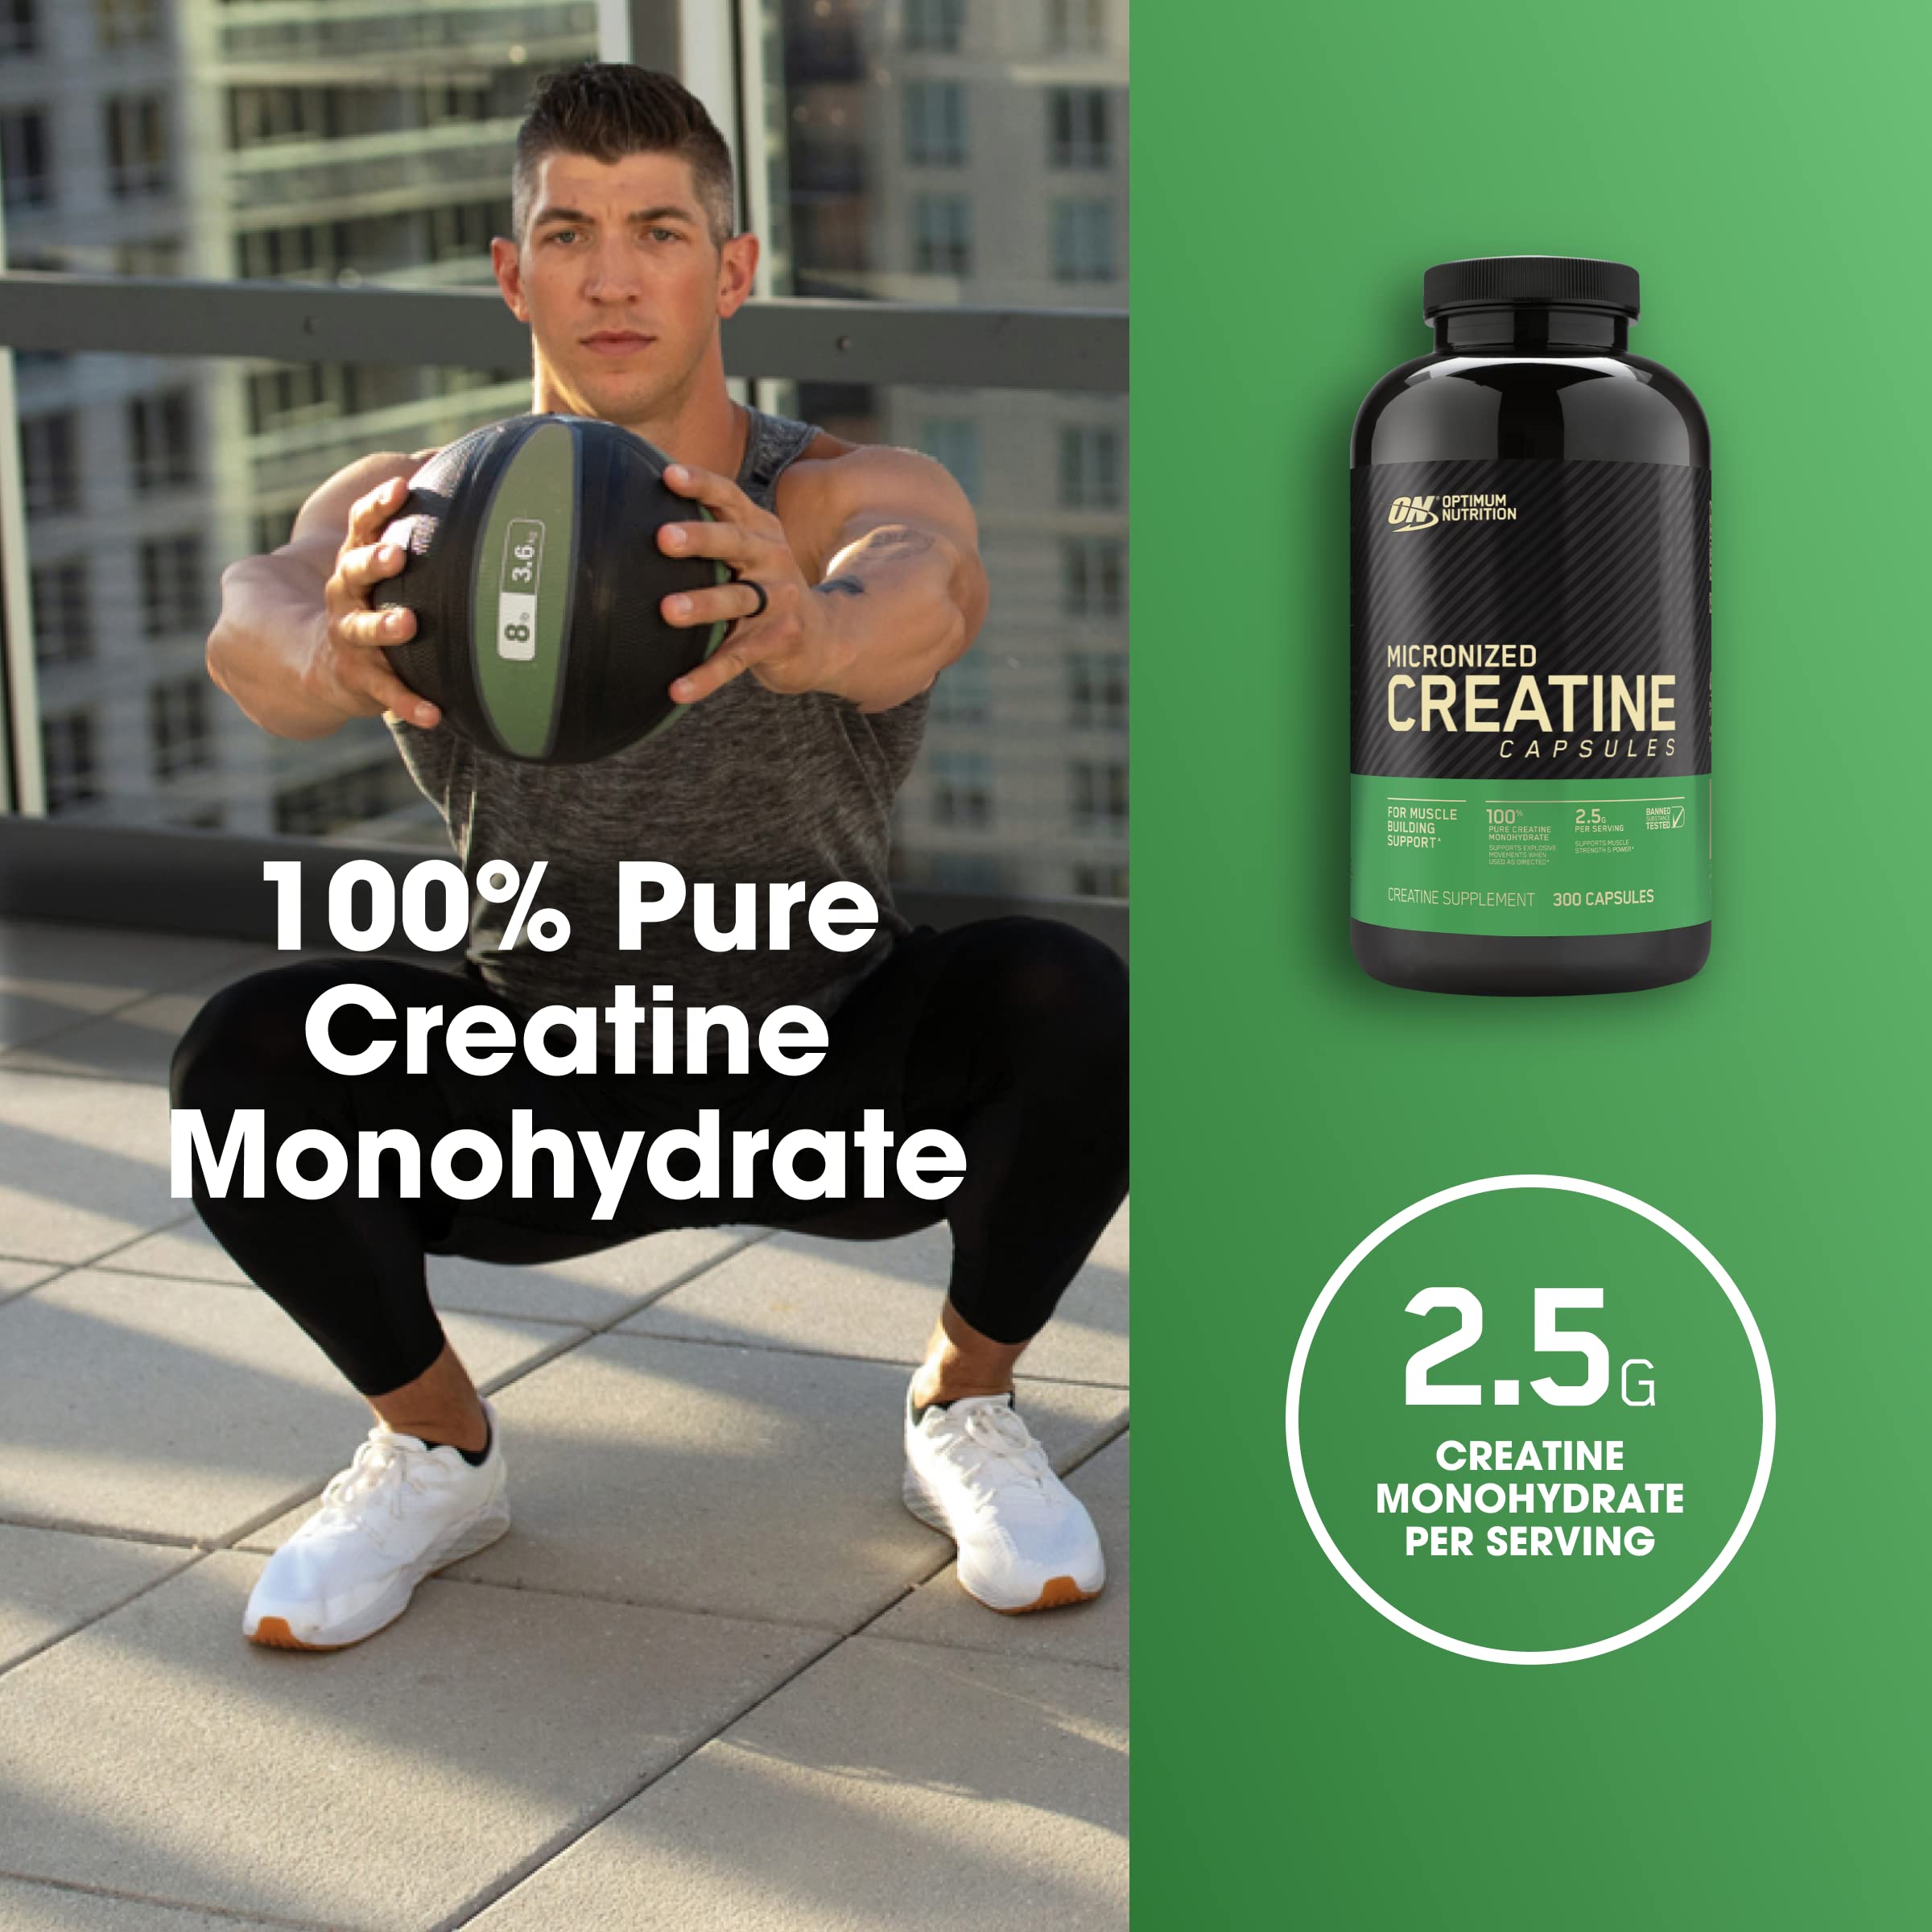 Optimum Nutrition Micronized Creatine Monohydrate Capsules, Keto Friendly, 2500mg, 300 Capsules (Packaging May Vary) & Opti-Men, Vitamin C, Zinc and Vitamin D, E, B12